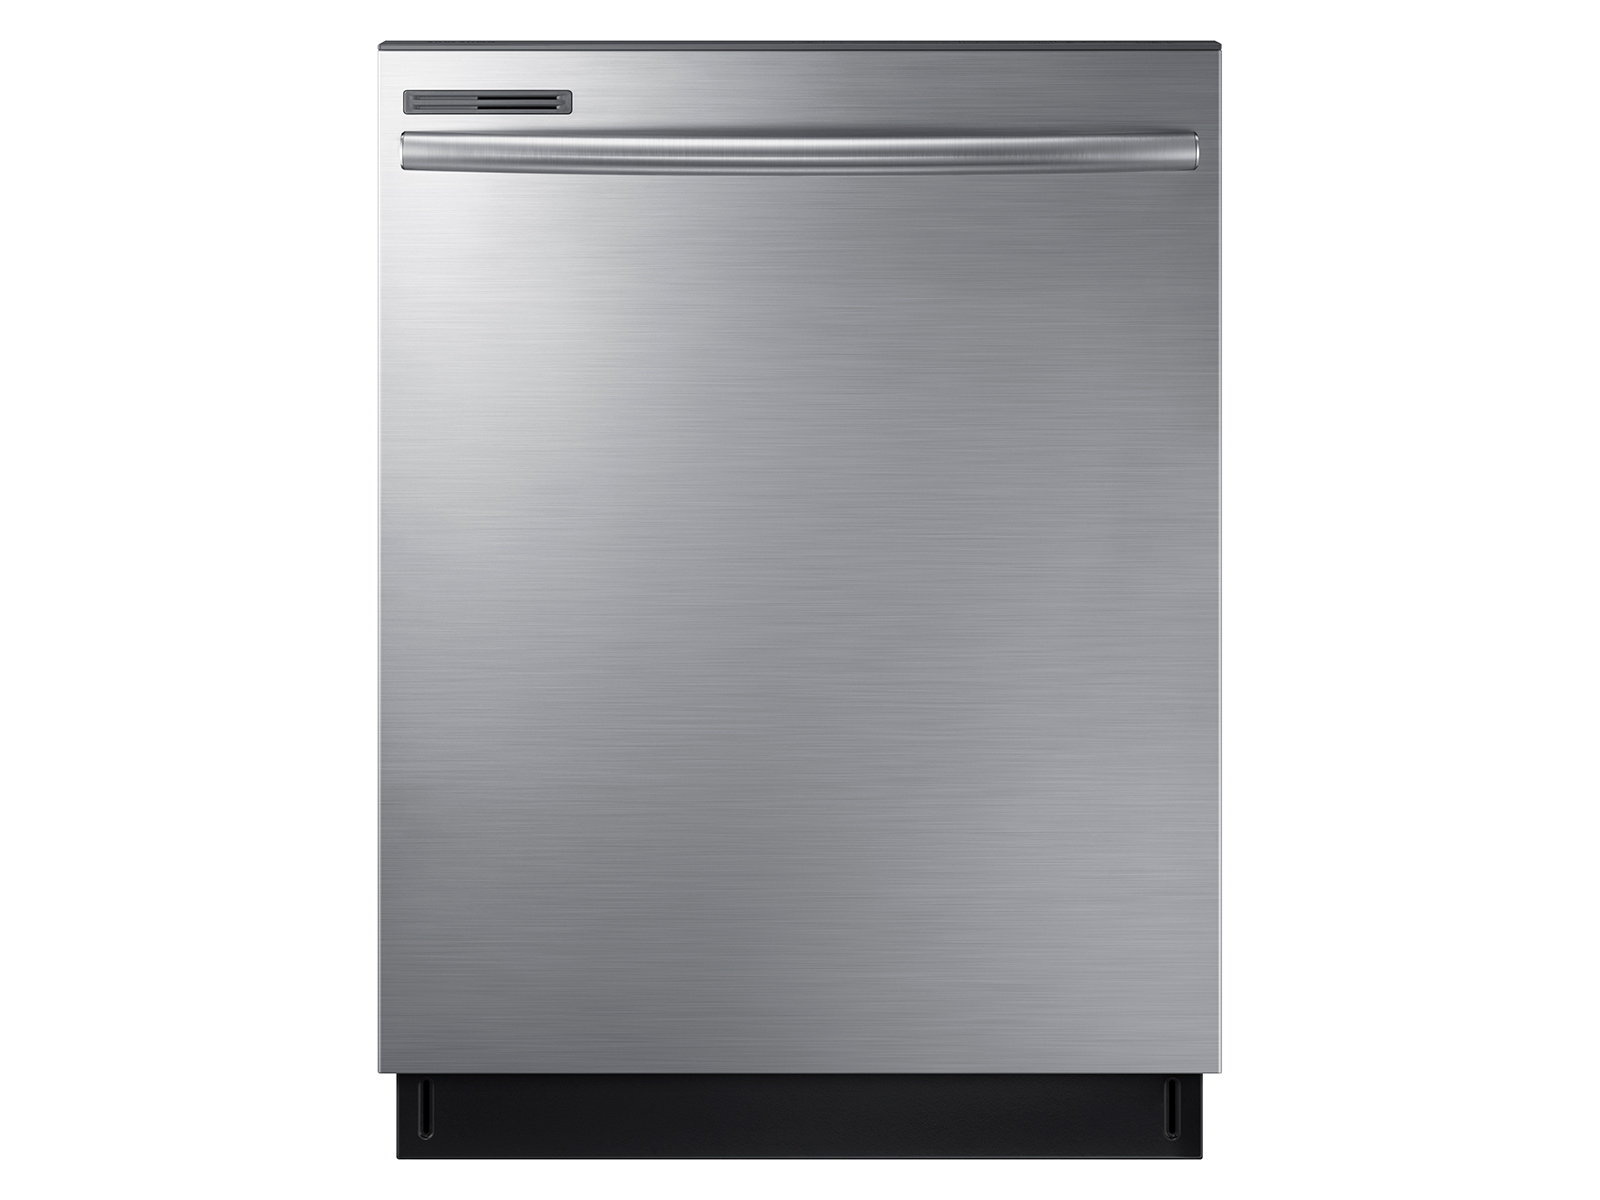 Dishwasher - DW80M2020US/AA | Samsung 